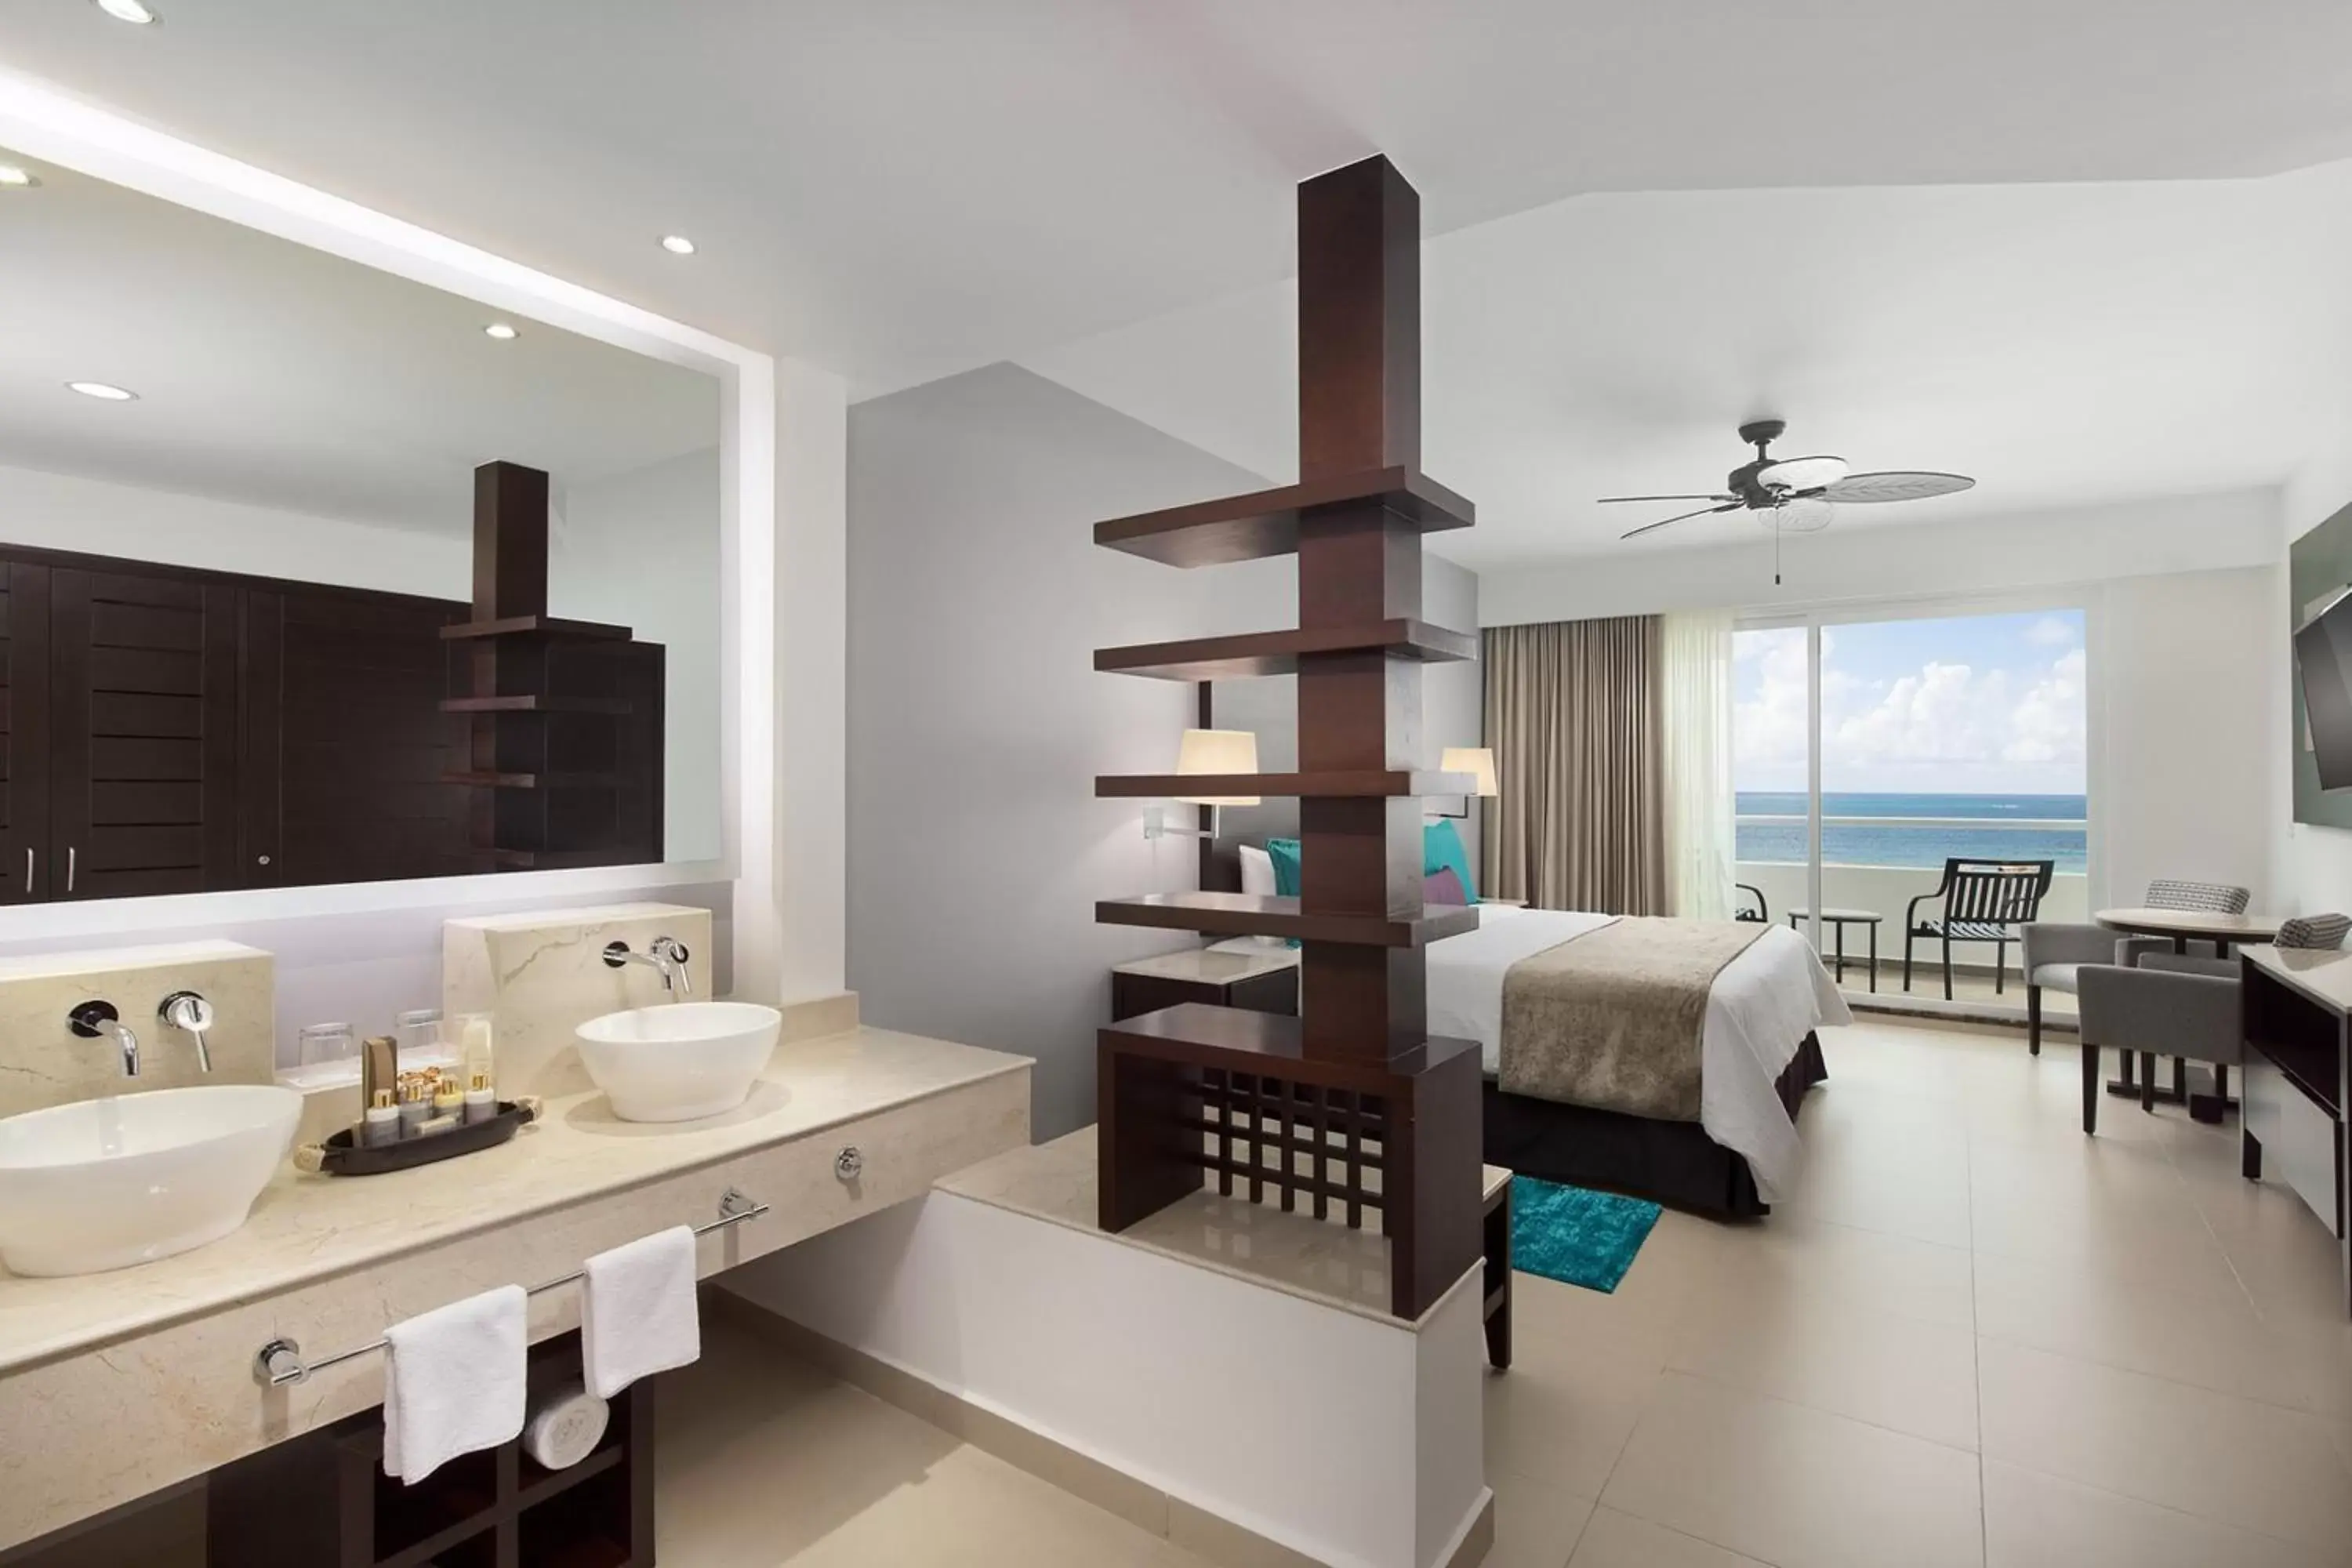 Photo of the whole room, Bathroom in Ventus at Marina El Cid Spa & Beach Resort - All Inclusive